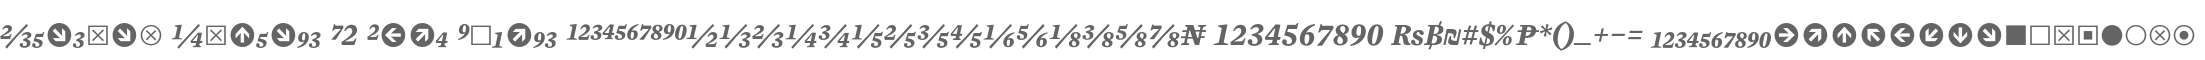 Mercury Numeric G2 Bold Italic